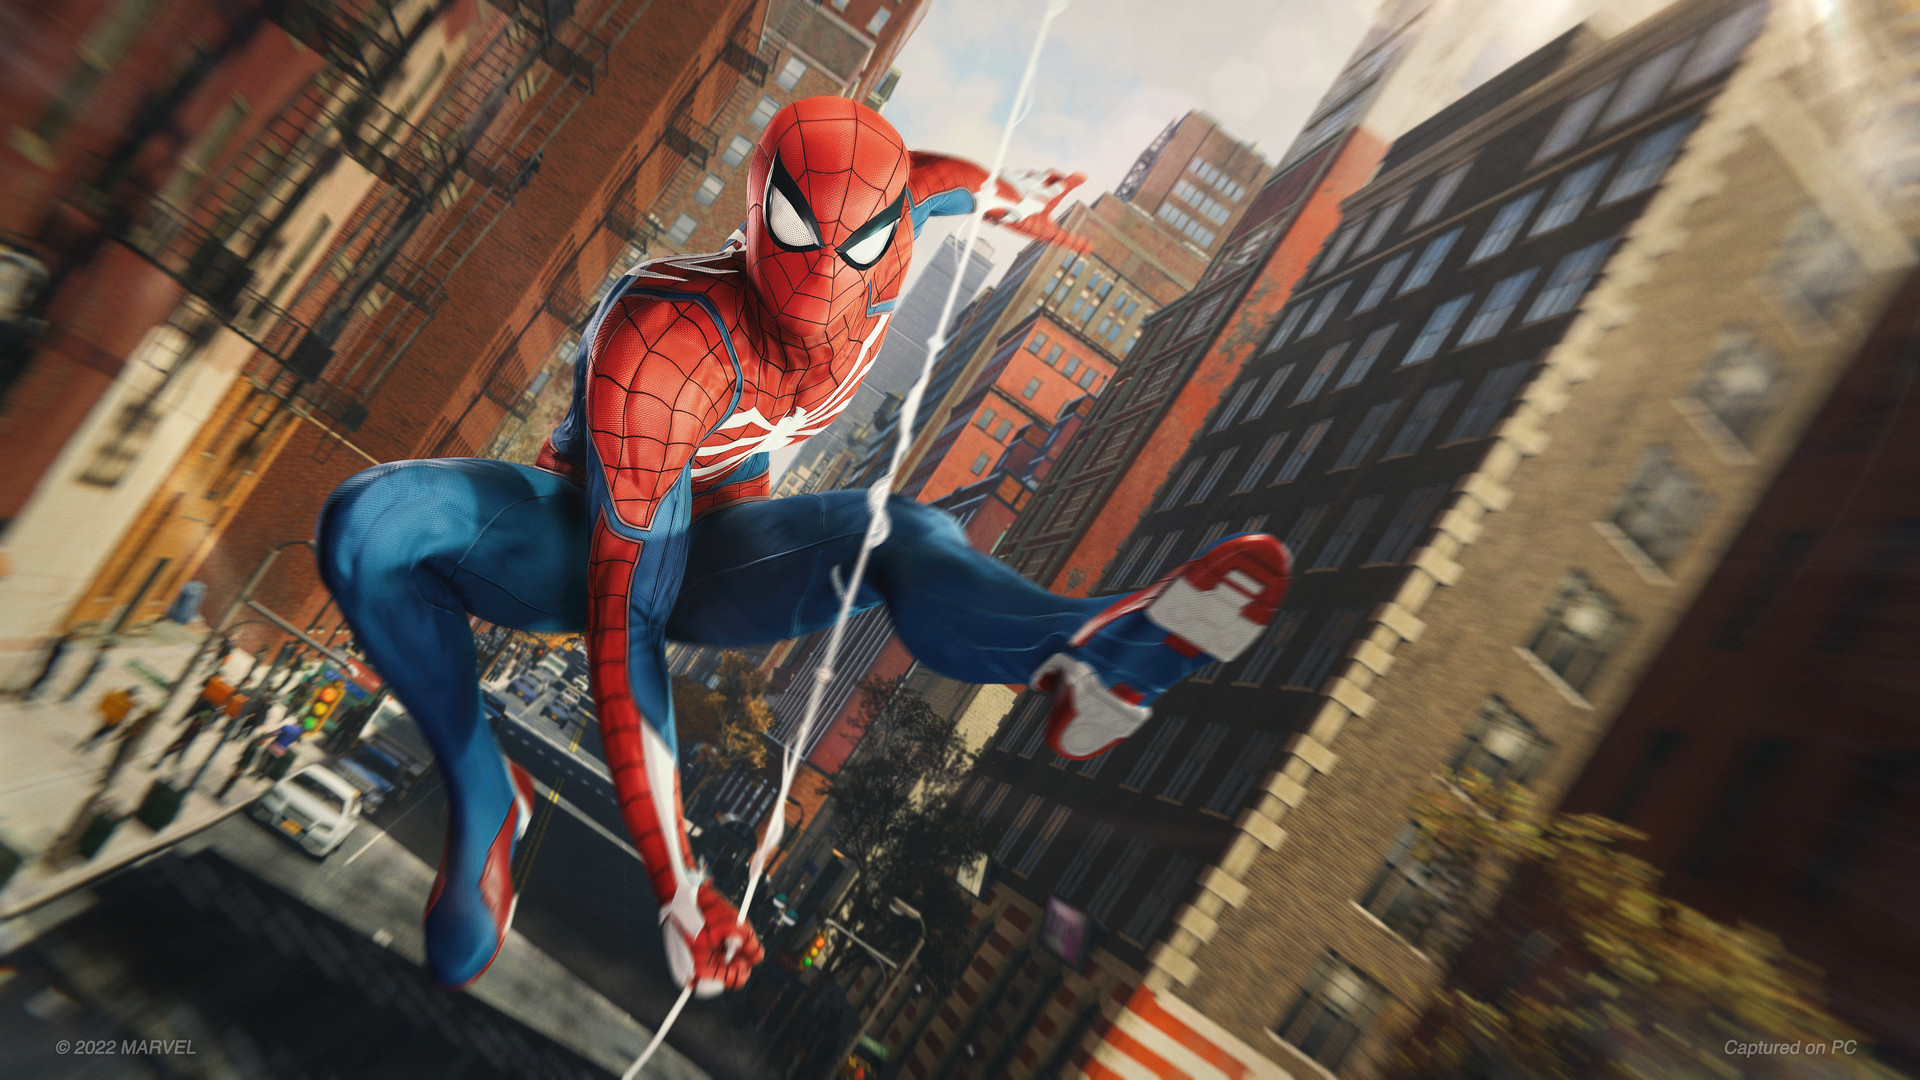 Marvel’s Spider-Man Remastered Steam ROW - Launch